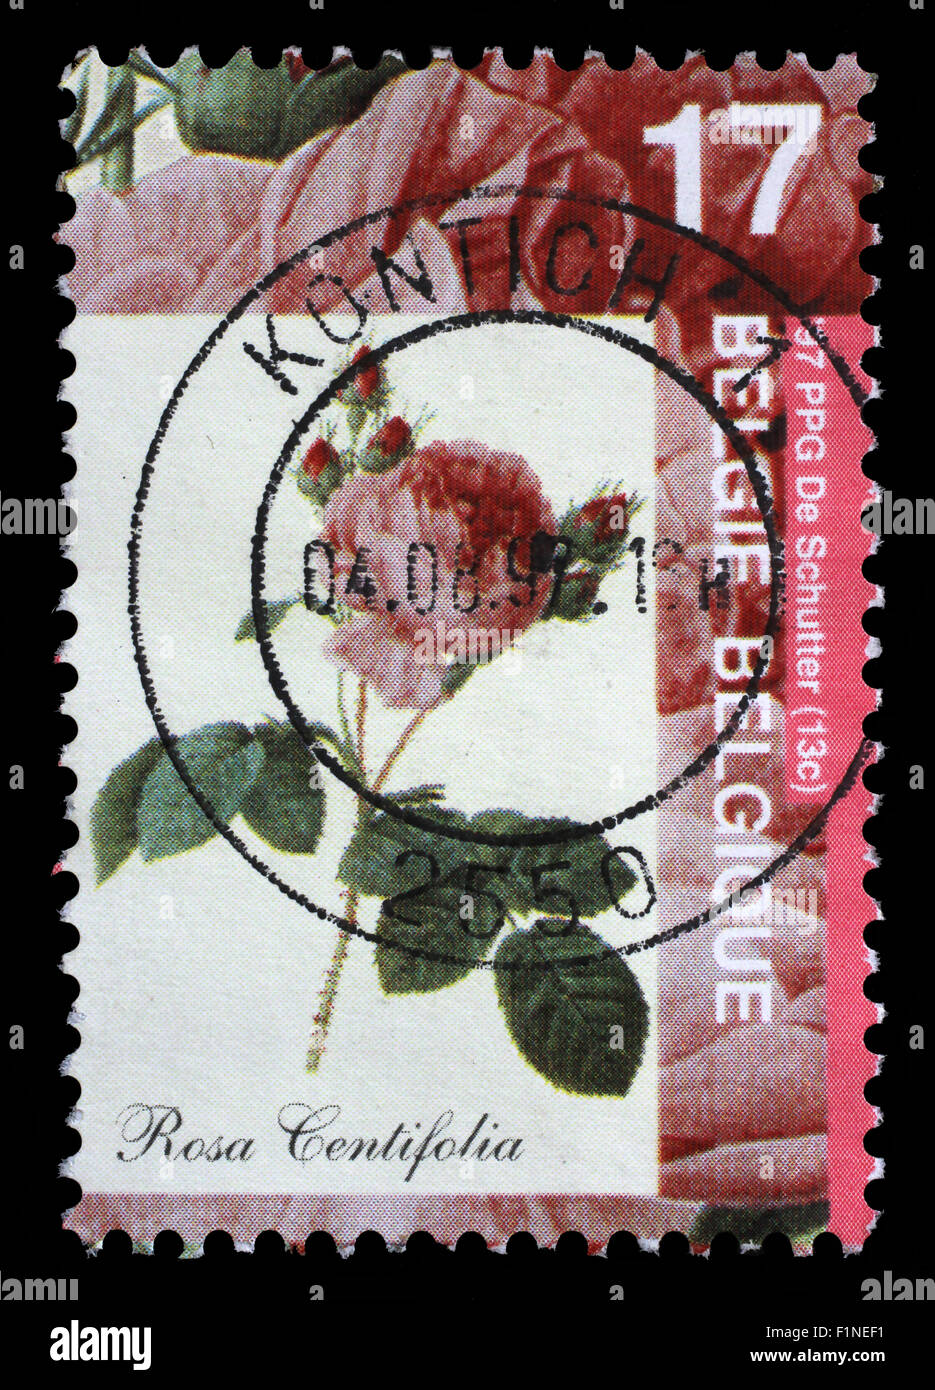 Stamp printed by Belgium shows Rose, Rosa centifolia, circa 1997. Stock Photo